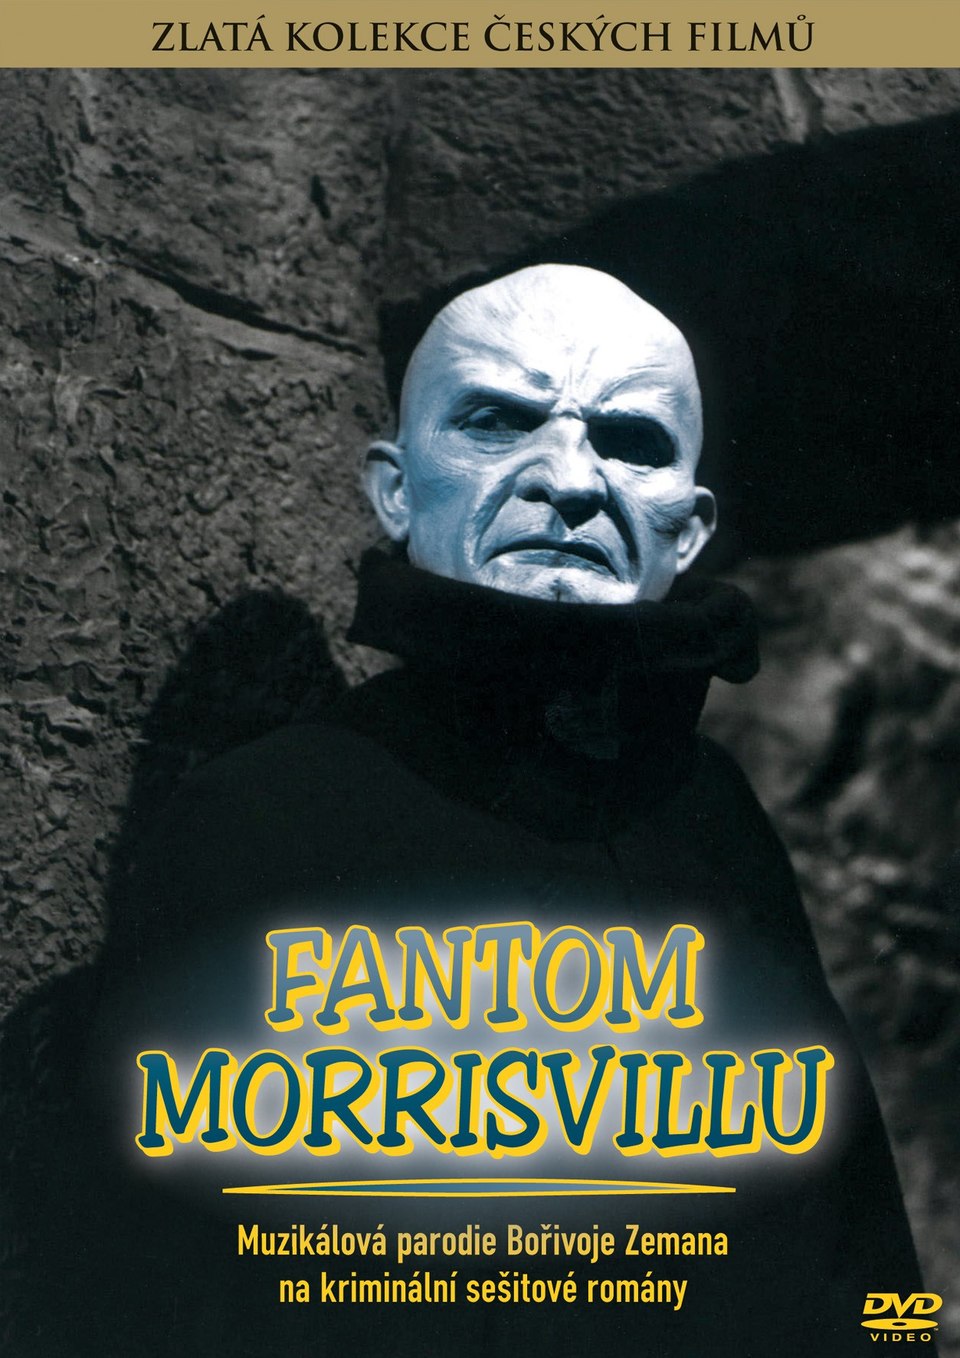 Film Fantom Morrisvillu